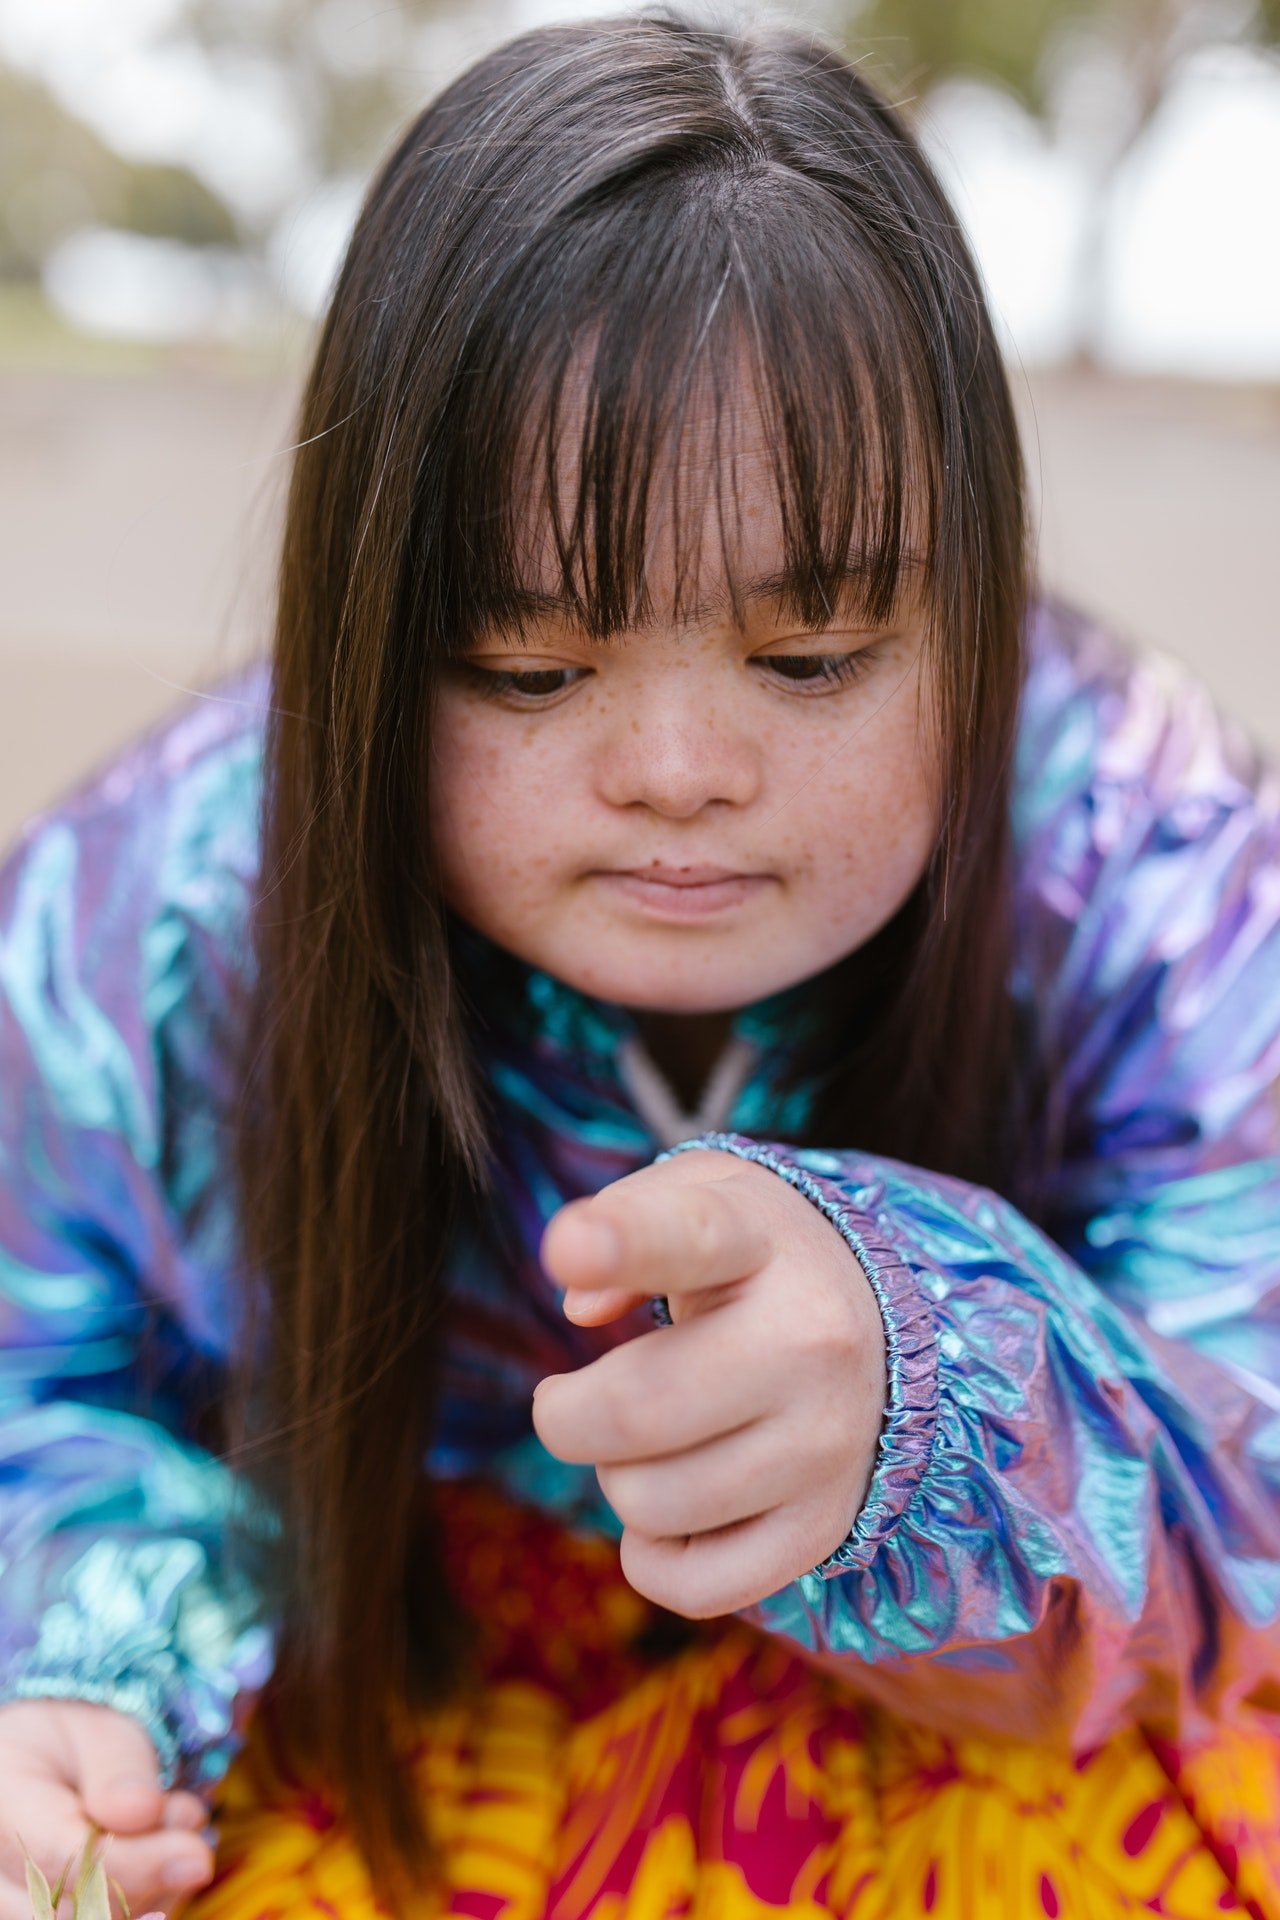 Chica con síndrome de Down. | Foto: Pexels